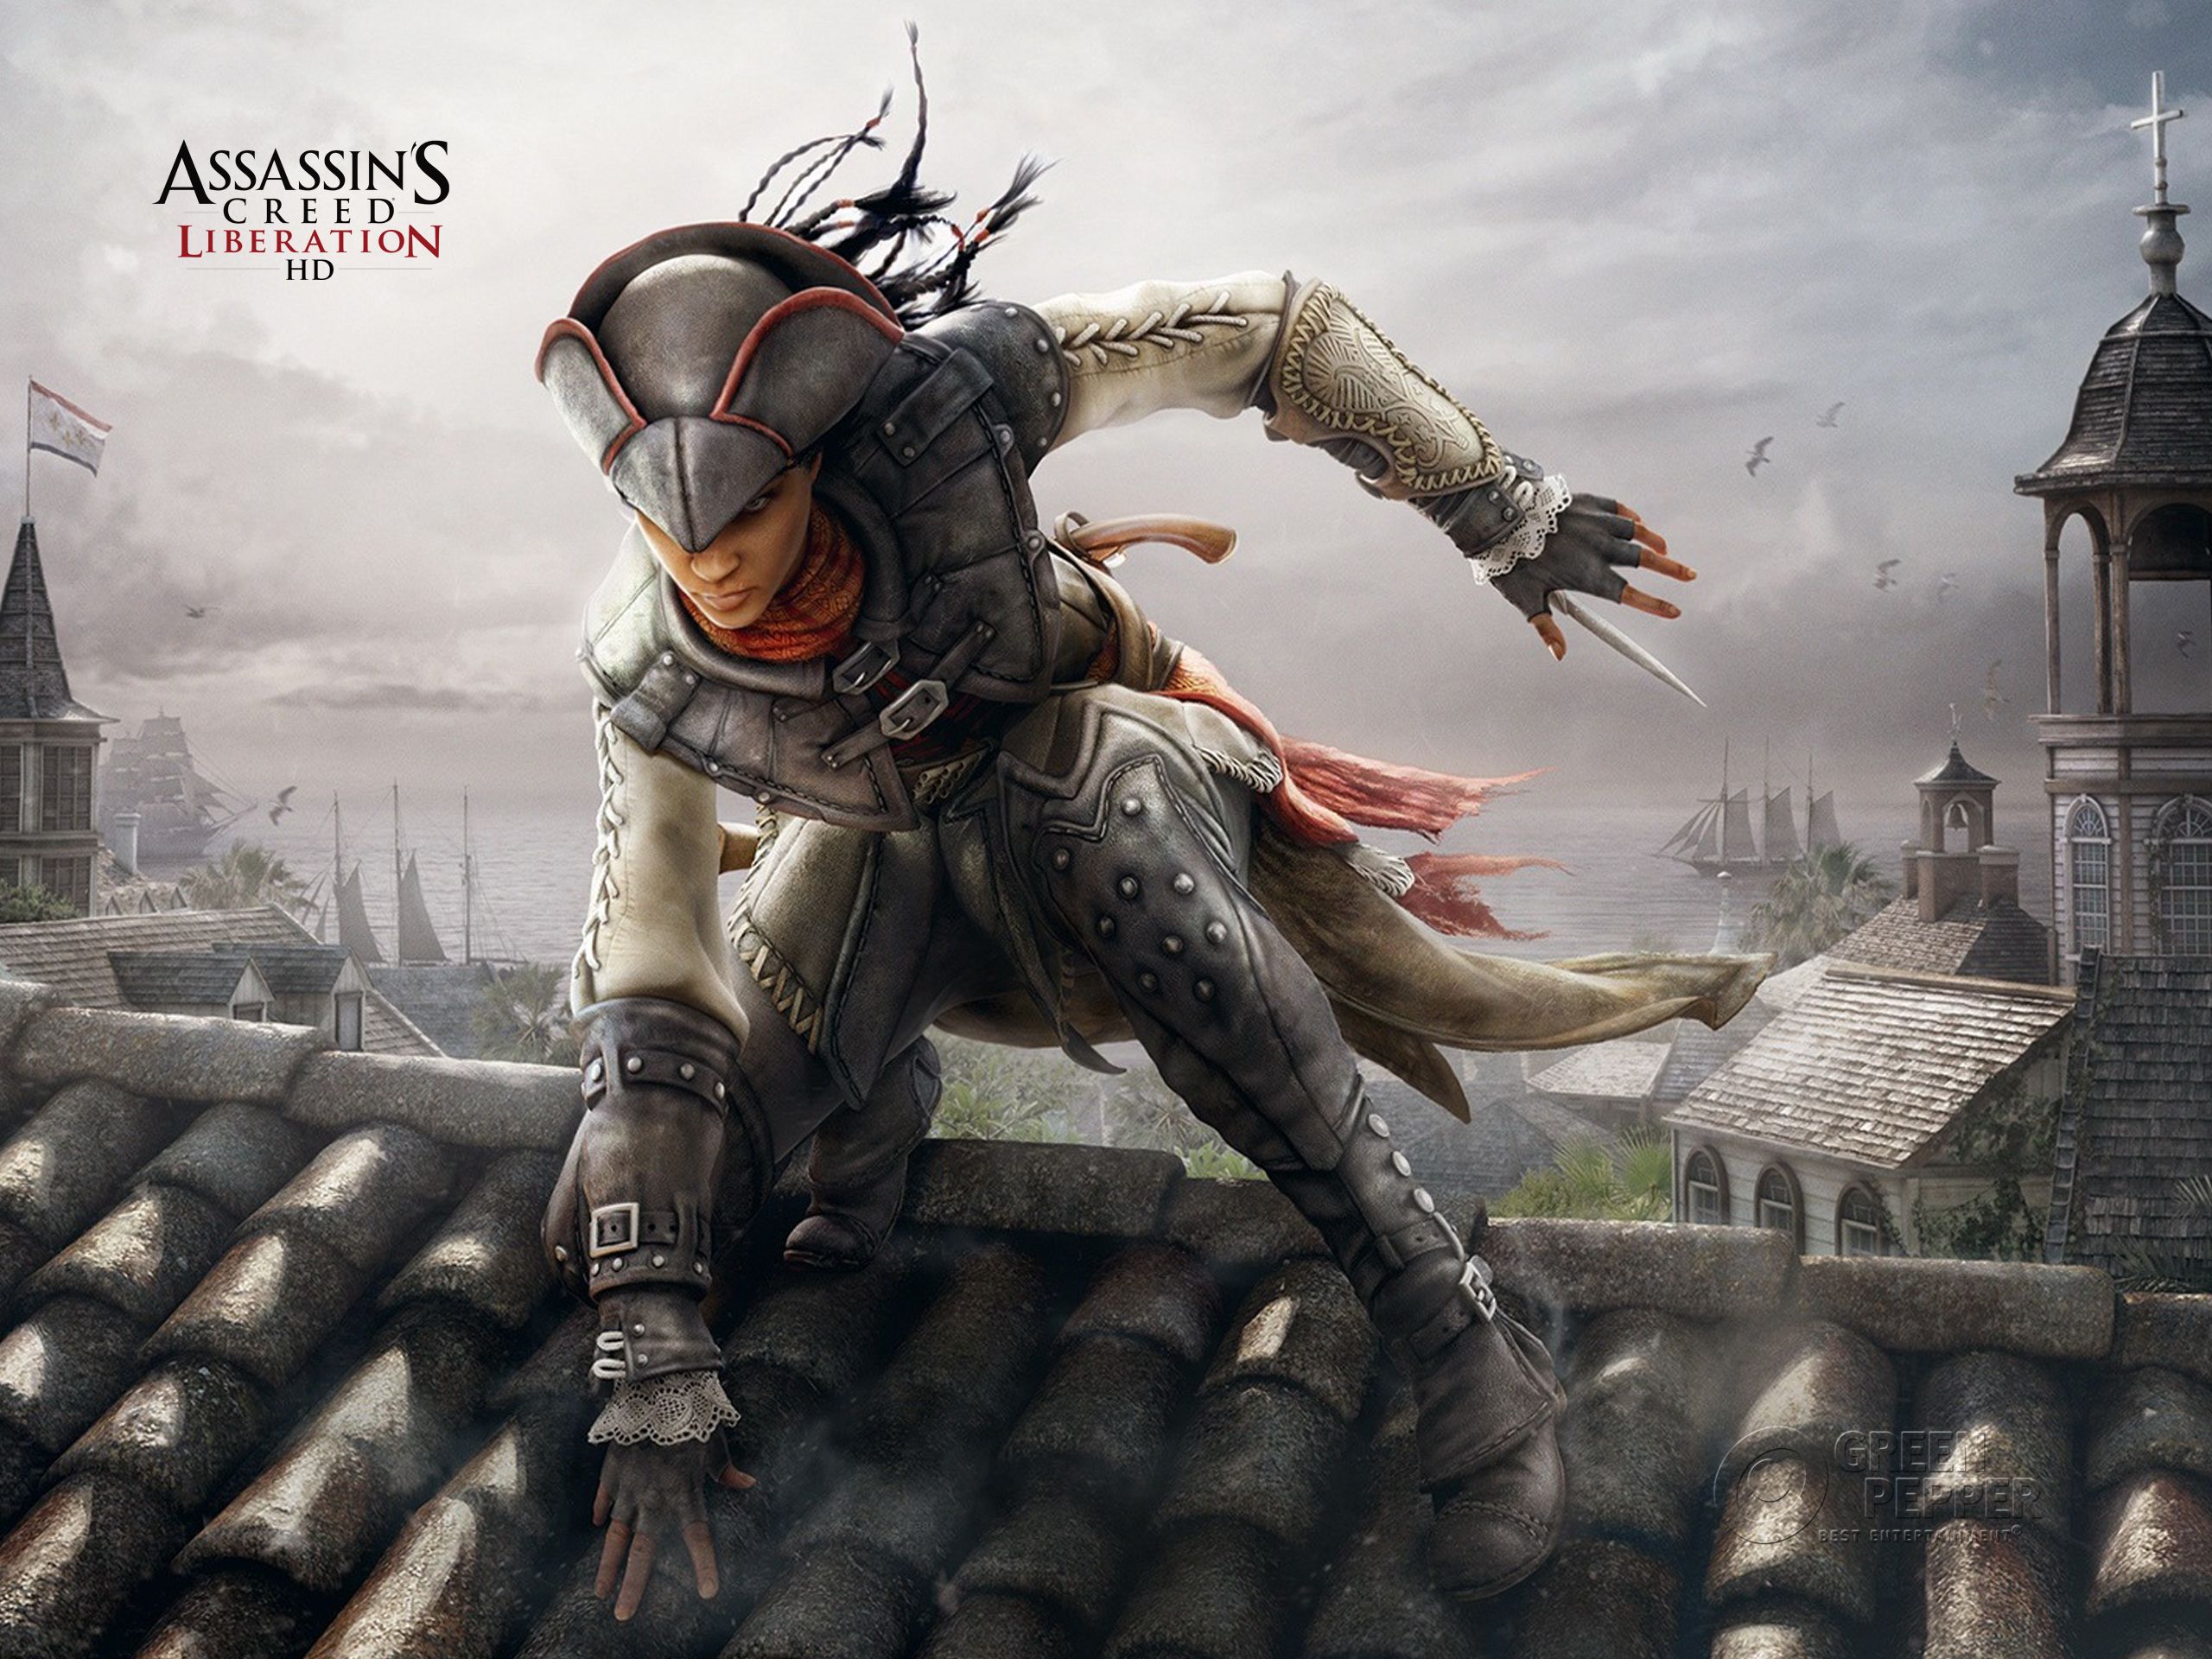 Assassin's Creed III: Liberation (2014) promotional art